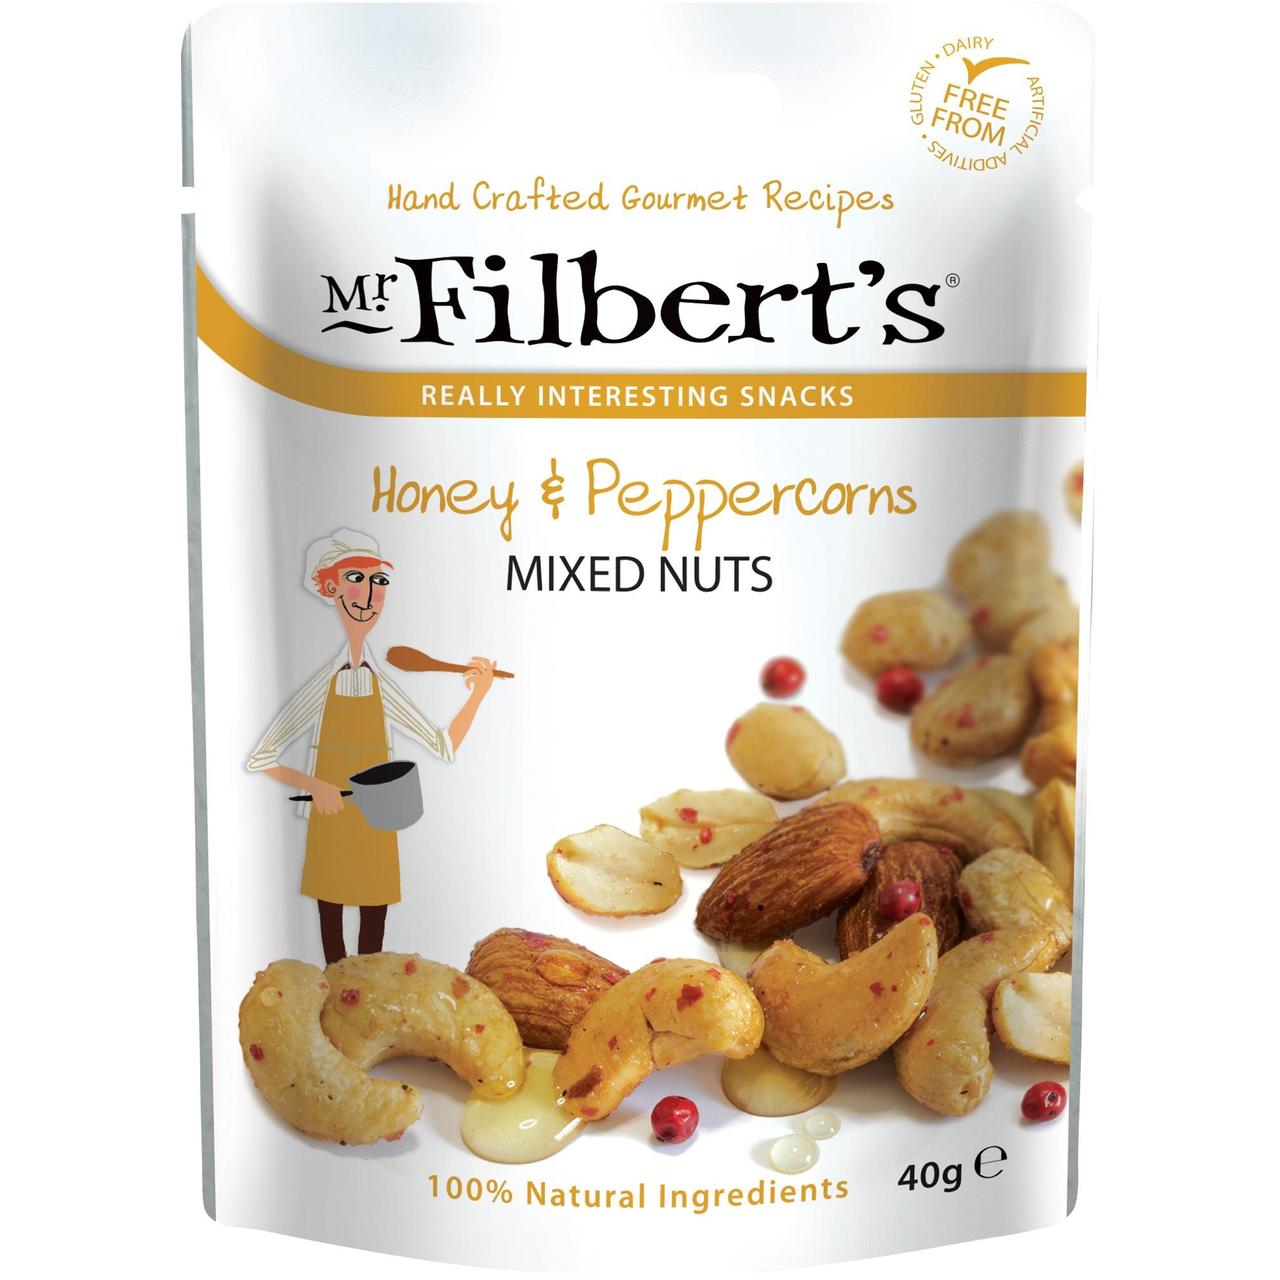 Mr Filberts Honey & Peppercorn Mixed Nuts